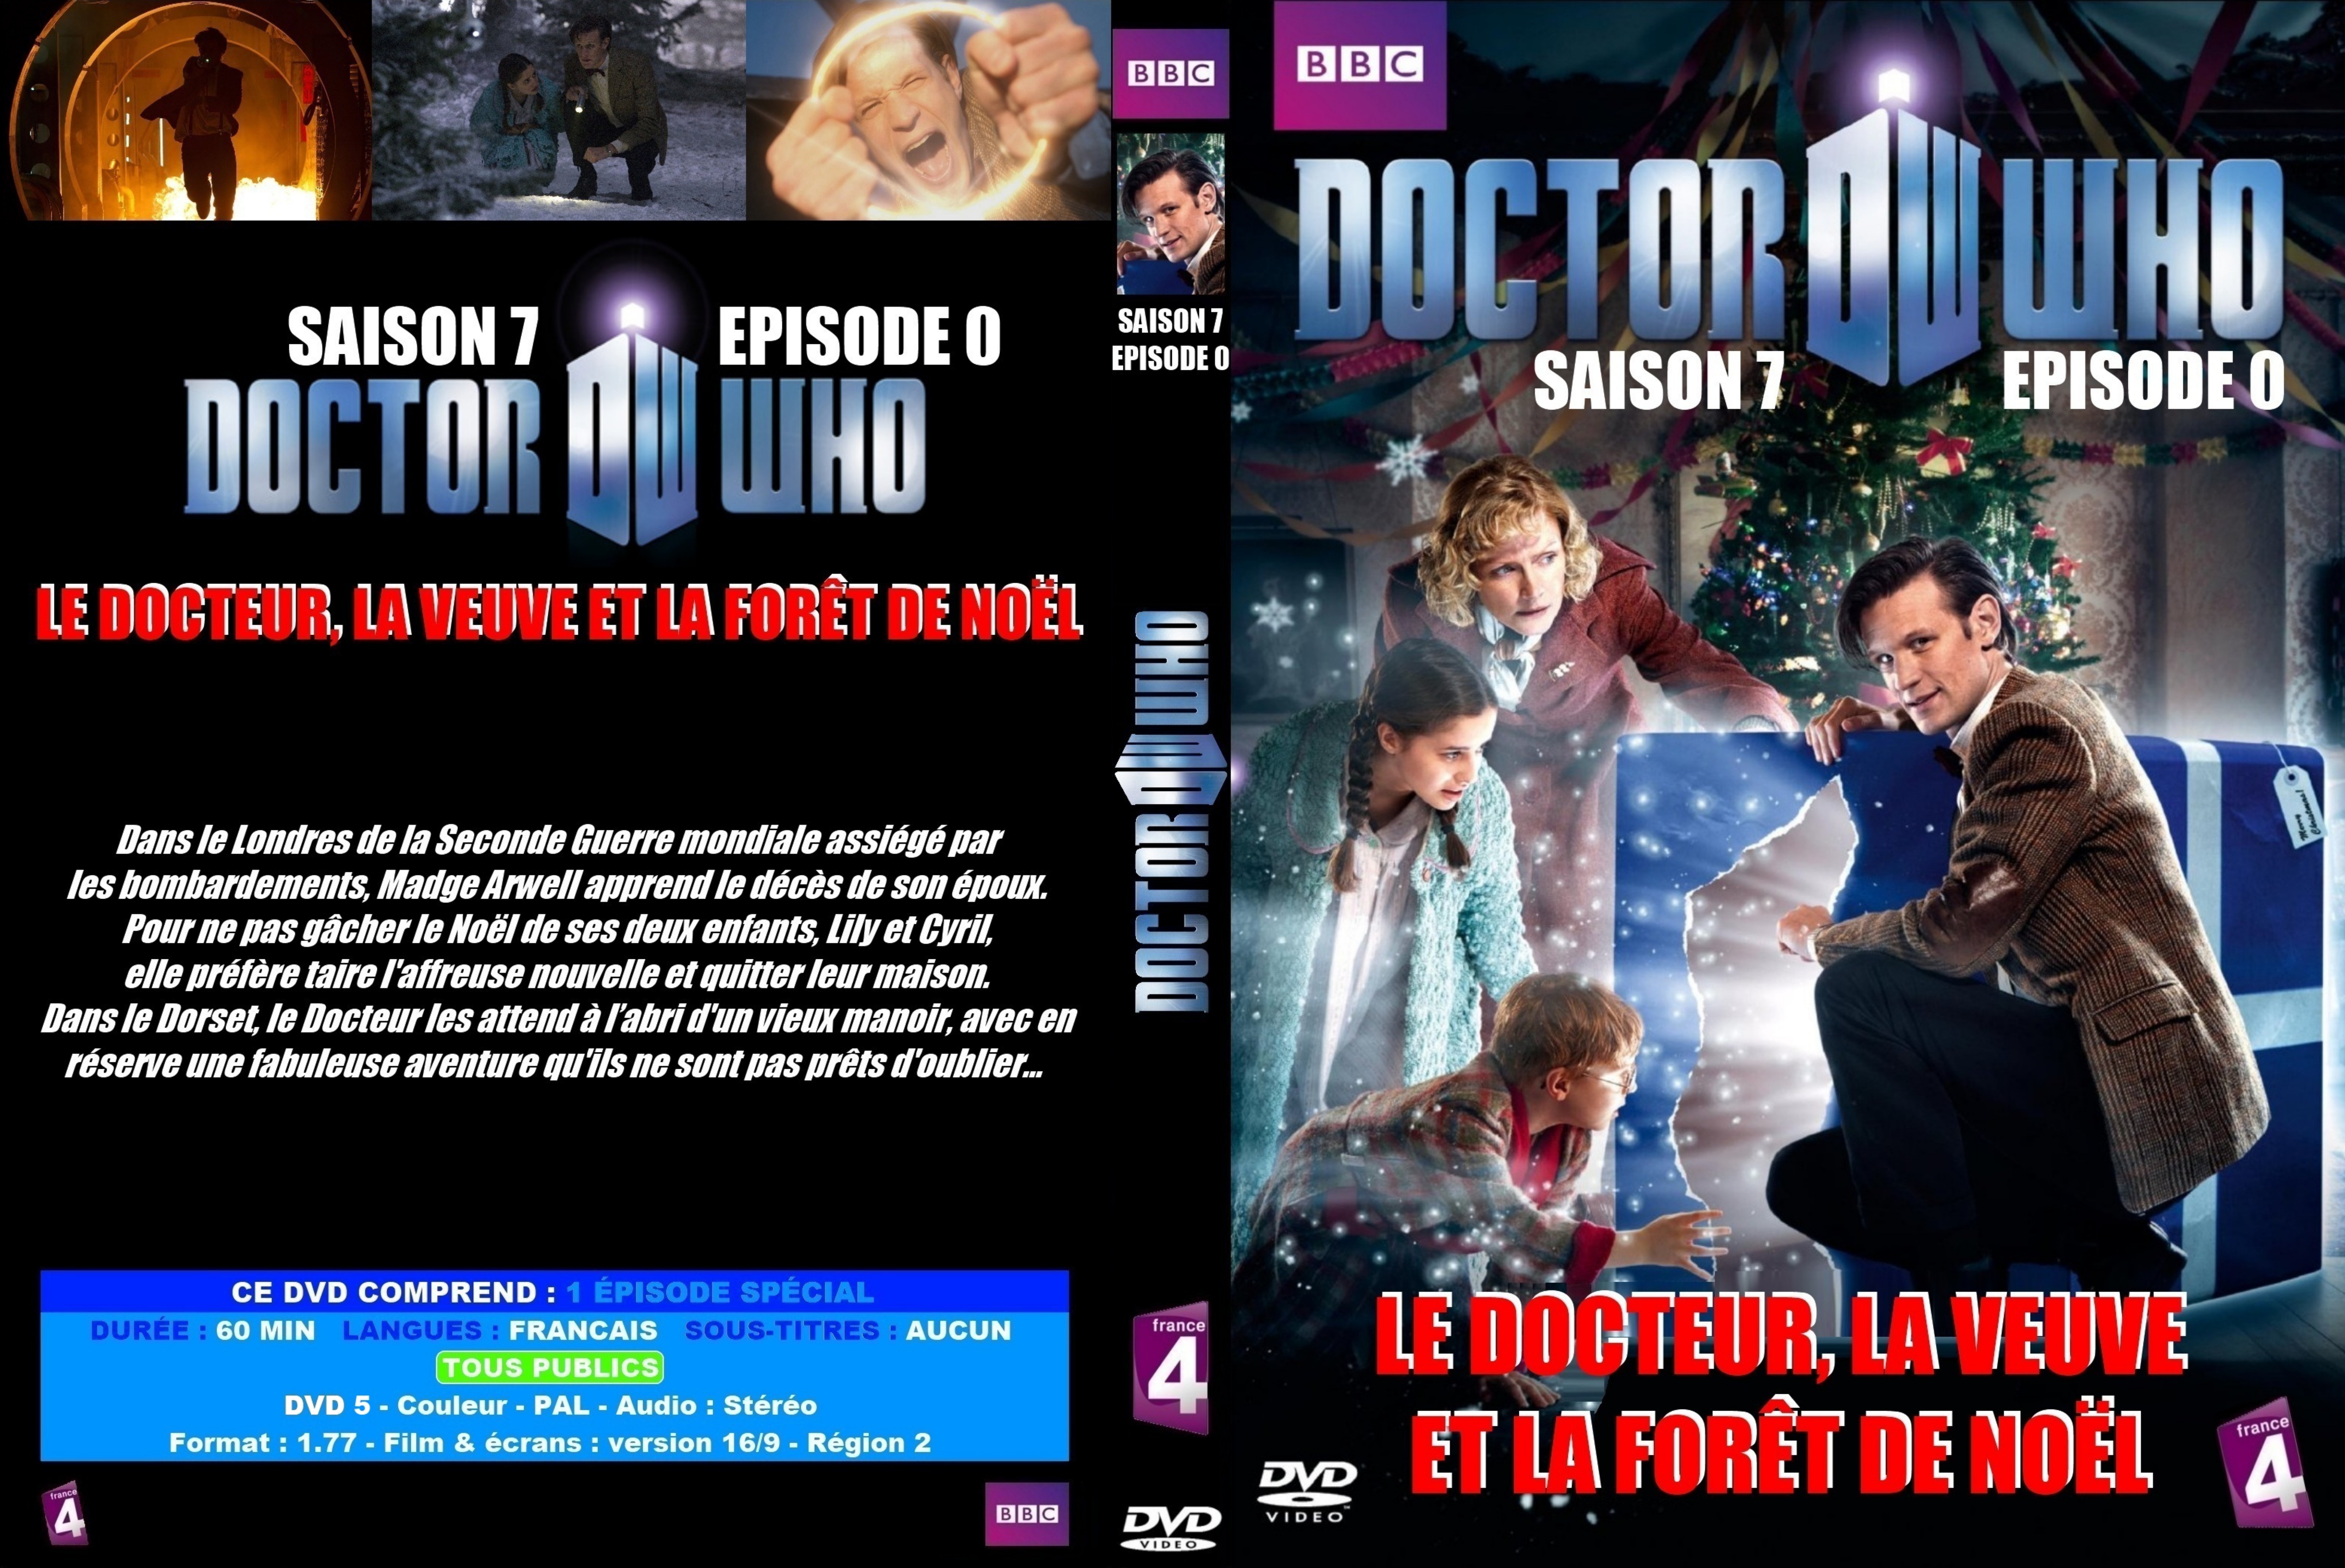 Jaquette DVD Doctor Who Saison 7 Episode 0 custom